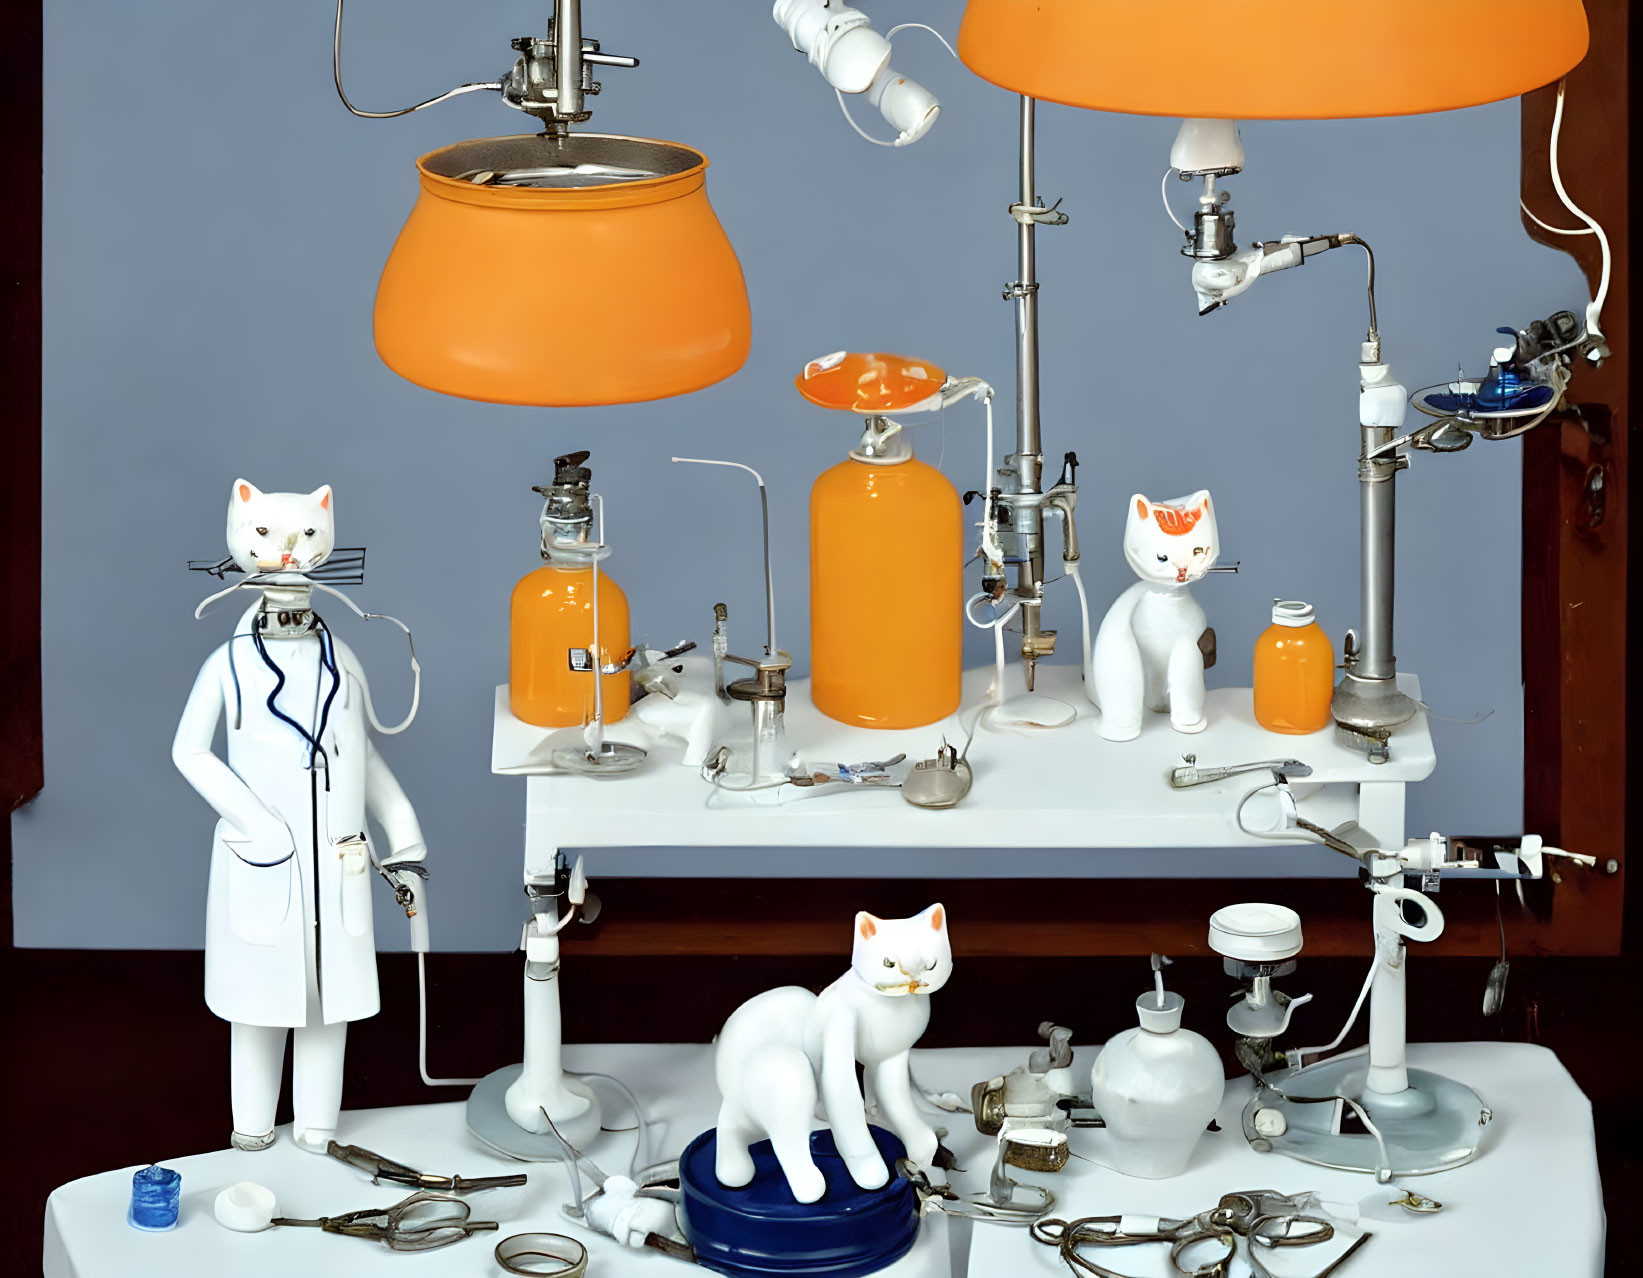 Surreal anthropomorphic white cat figurines in laboratory setting